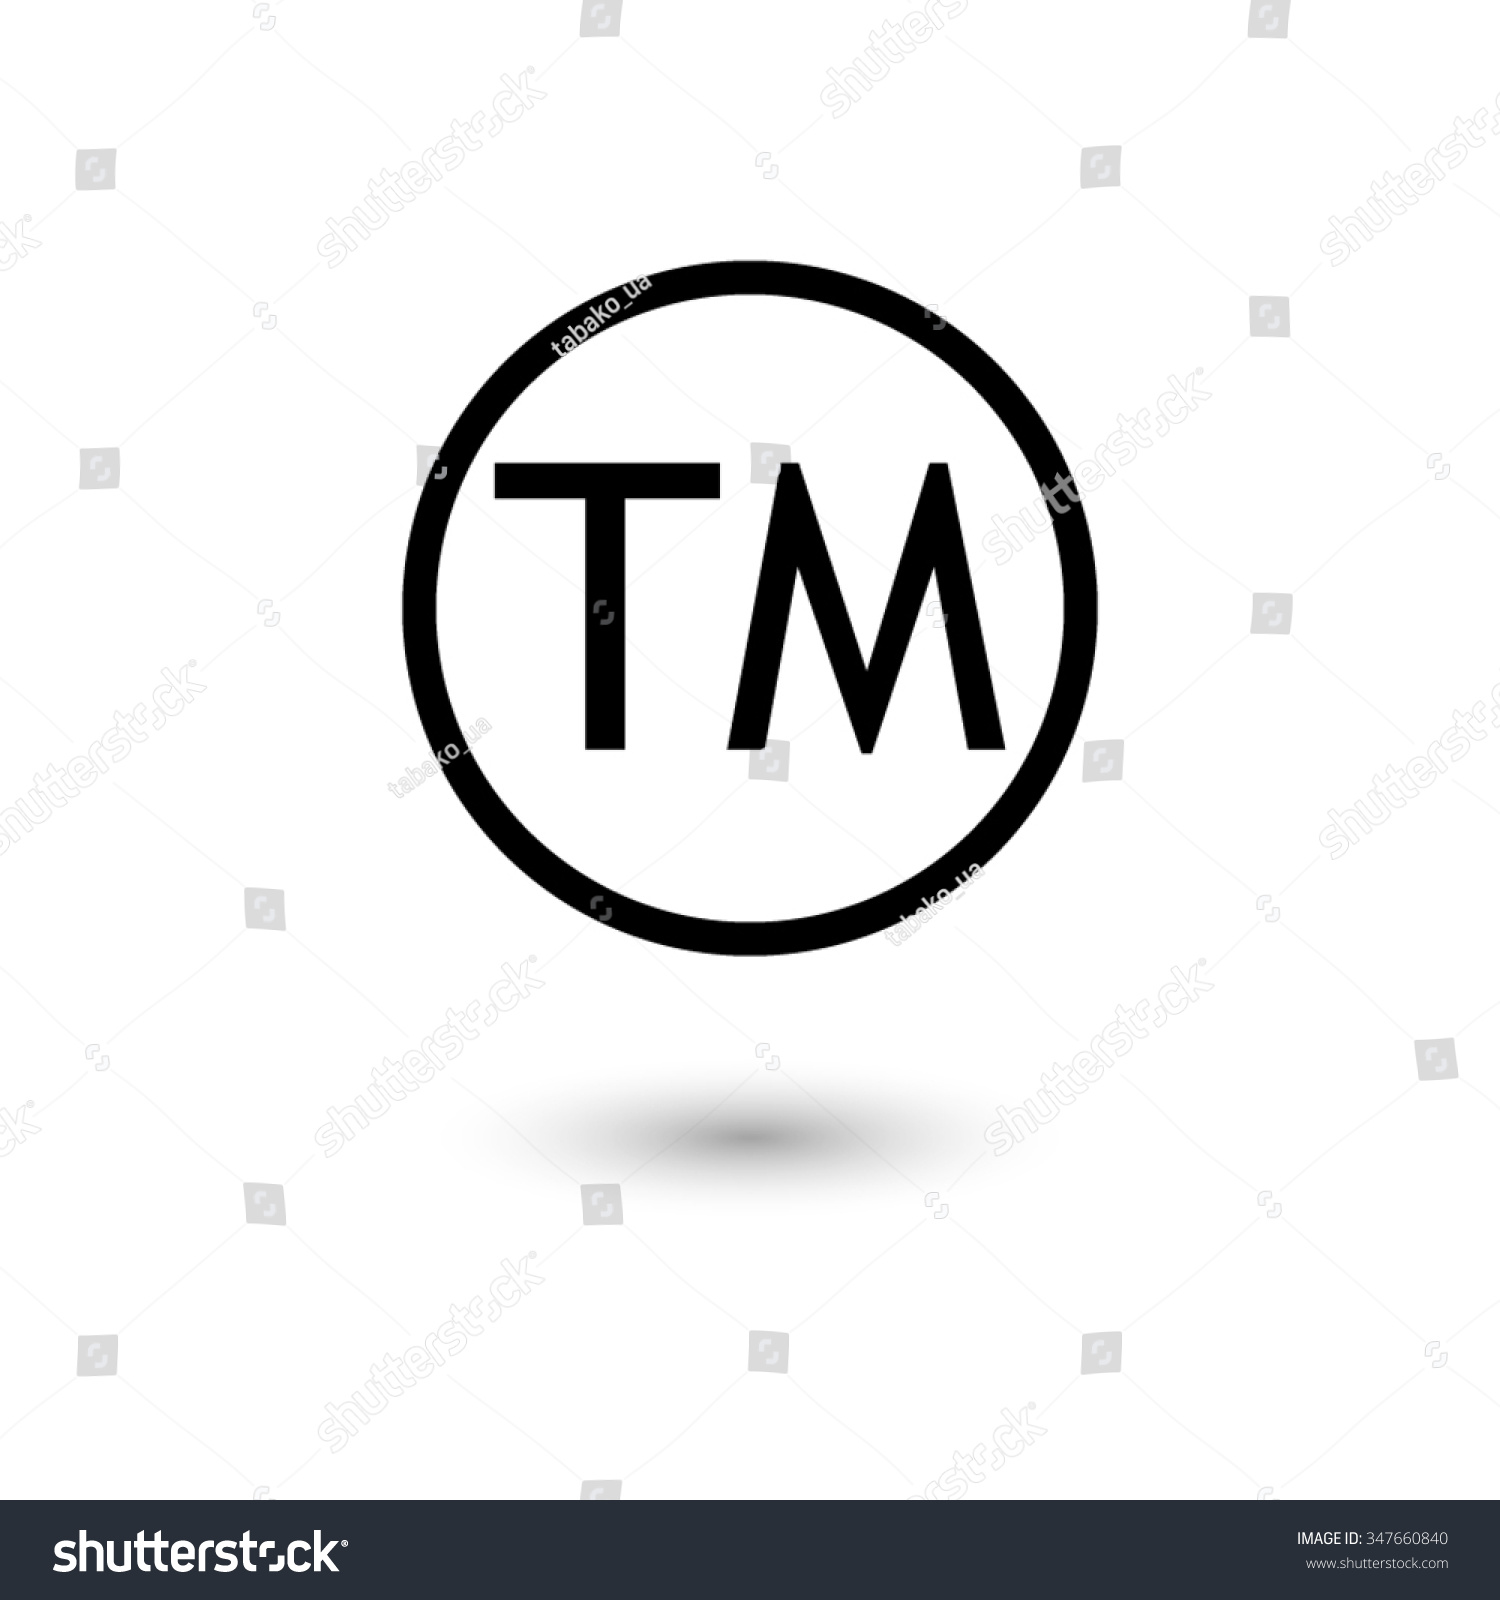 Trademark Symbol - Vector Icon - 347660840 : Shutterstock